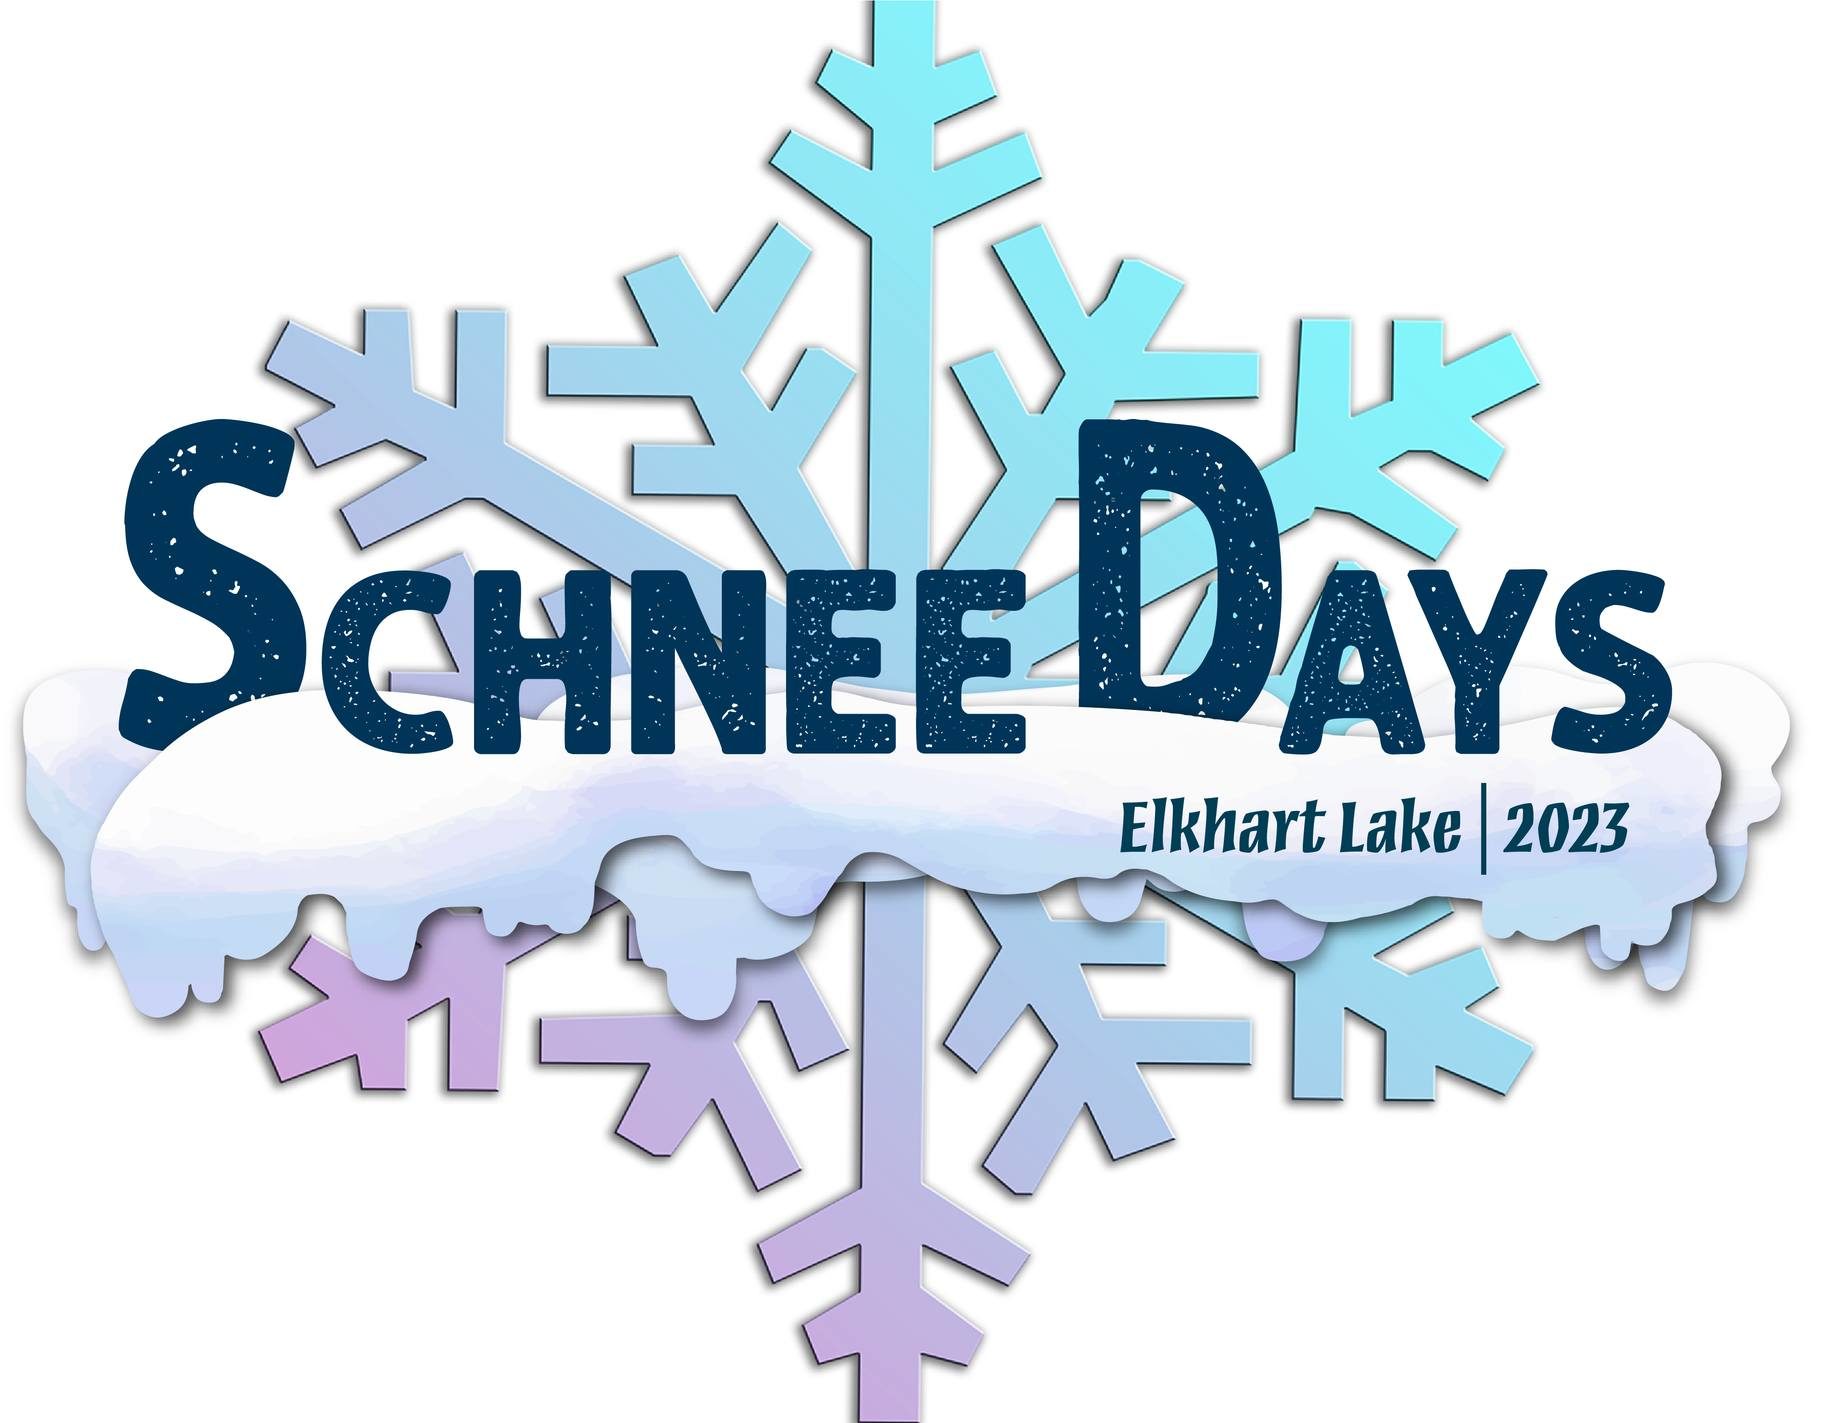 Schnee Days 2023 Visit Sheboygan County